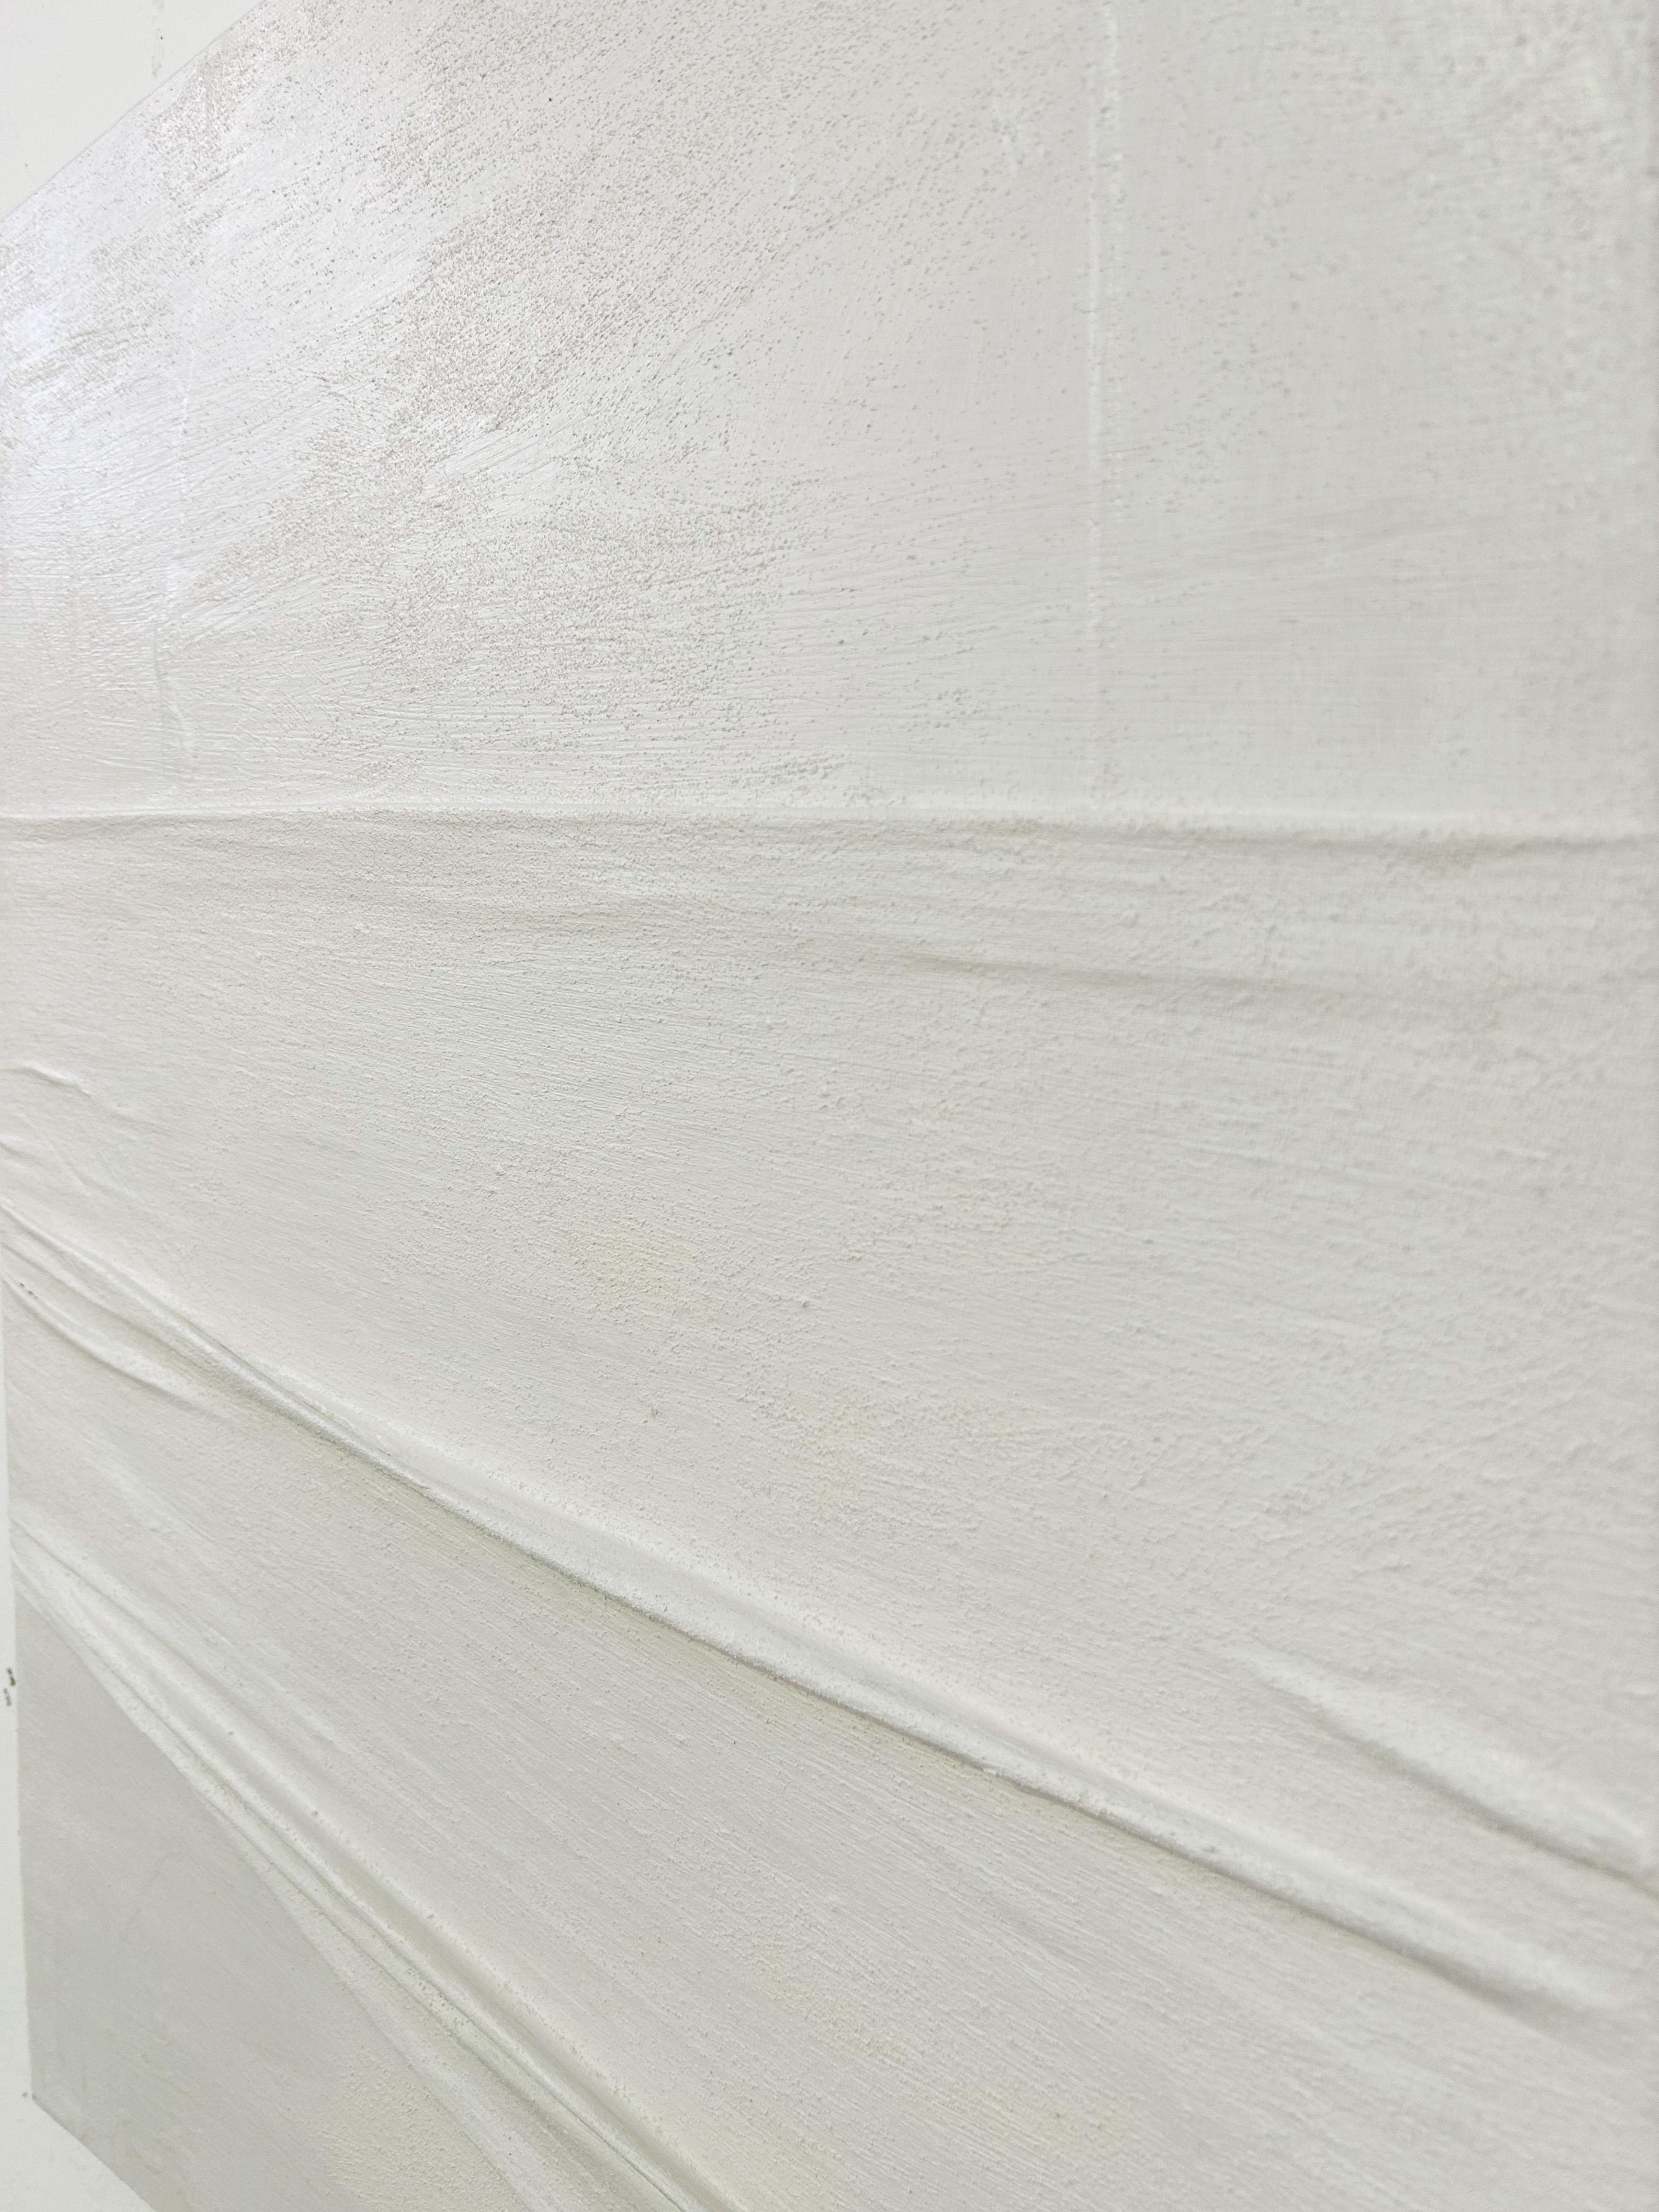 ABSTRACT White Artwork Contemporary Spanish Artist Alicia Gimeno 2024 For Sale 2